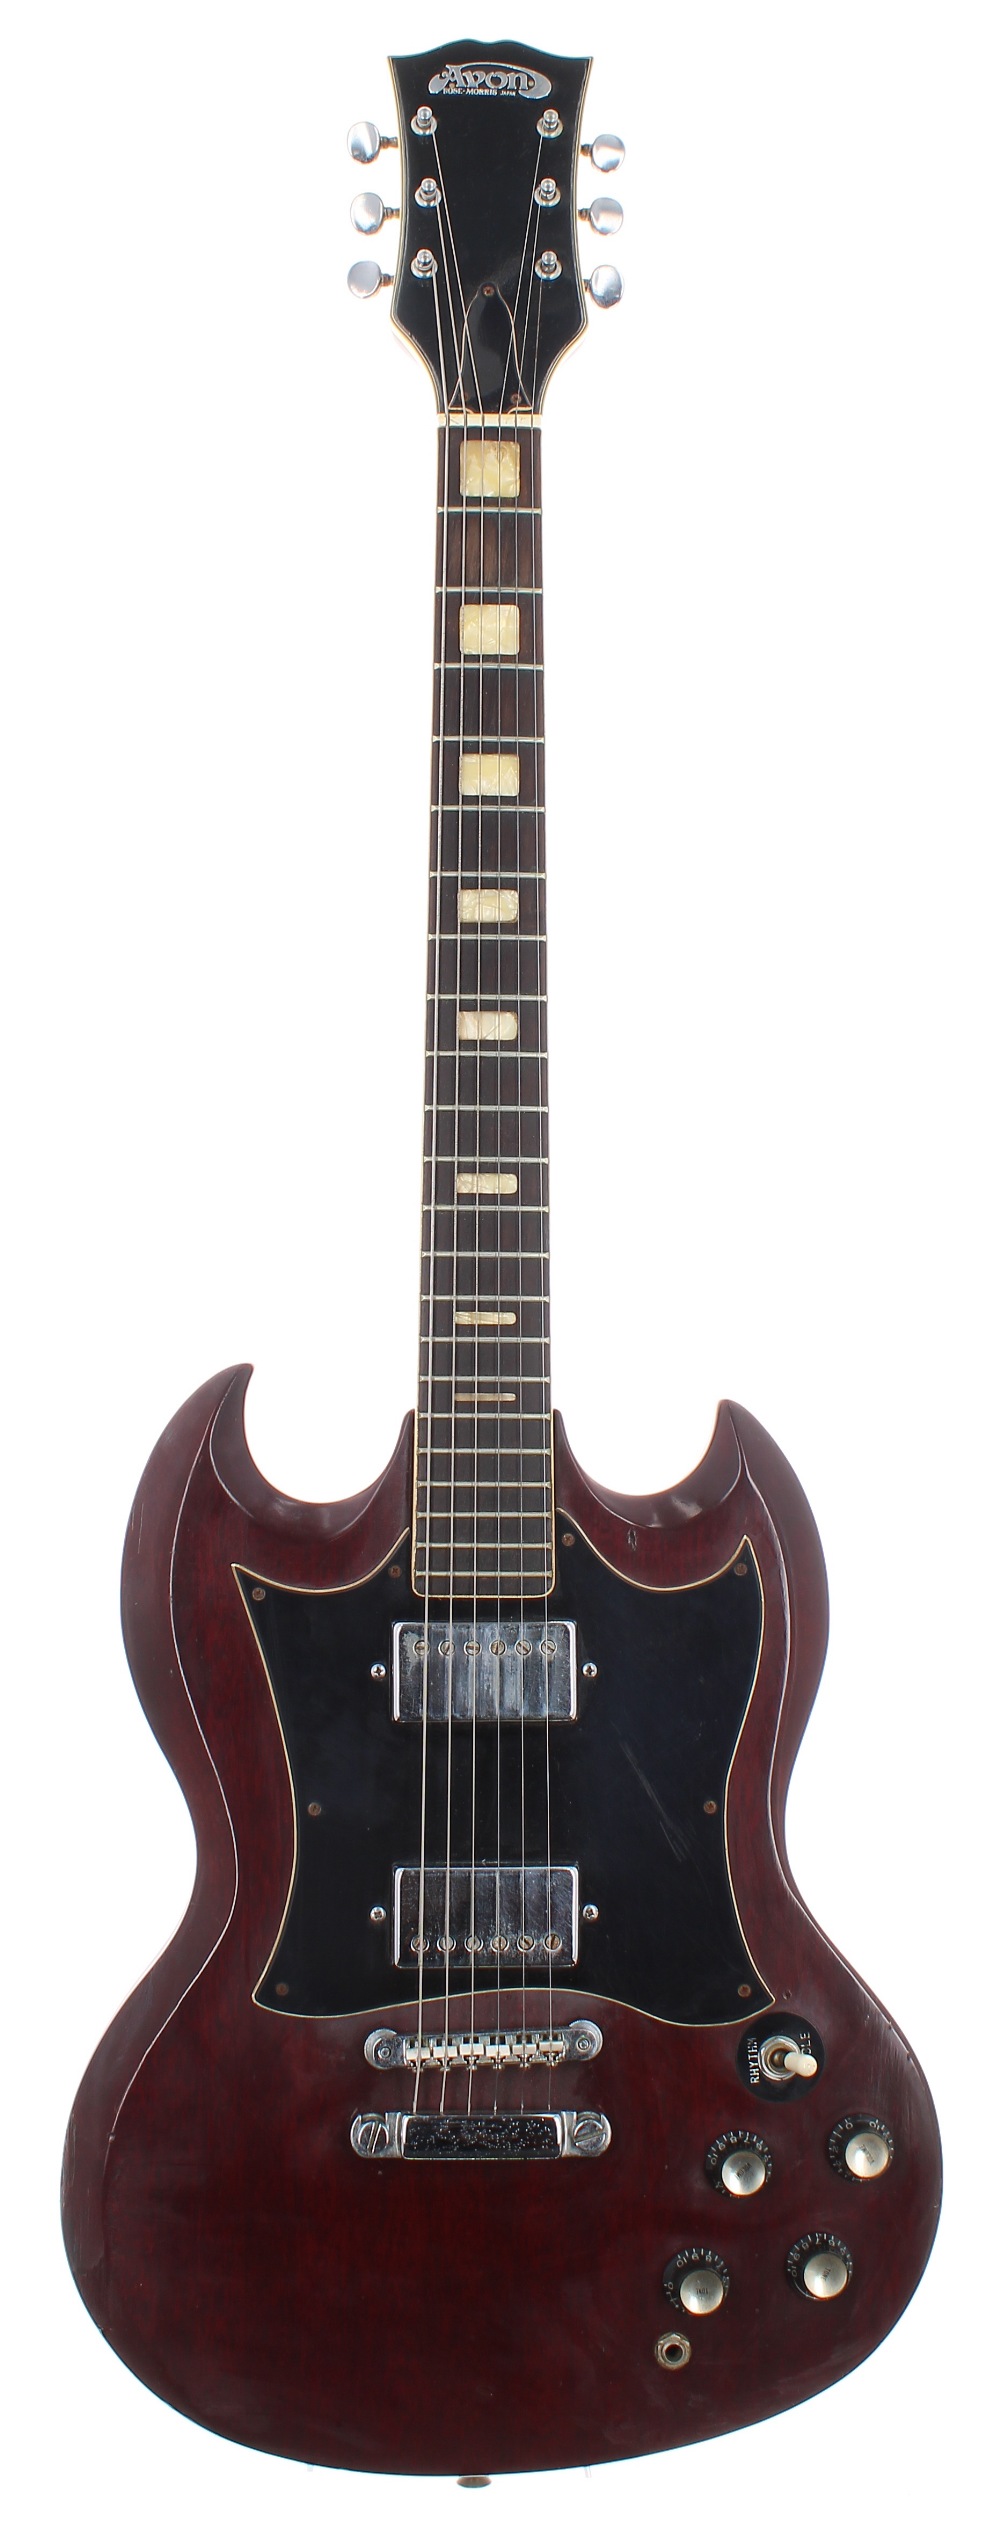 1970s Rose-Morris Avon Model 3404 electric guitar, made in Japan, ser. no. 1xx6; Finish: cherry,